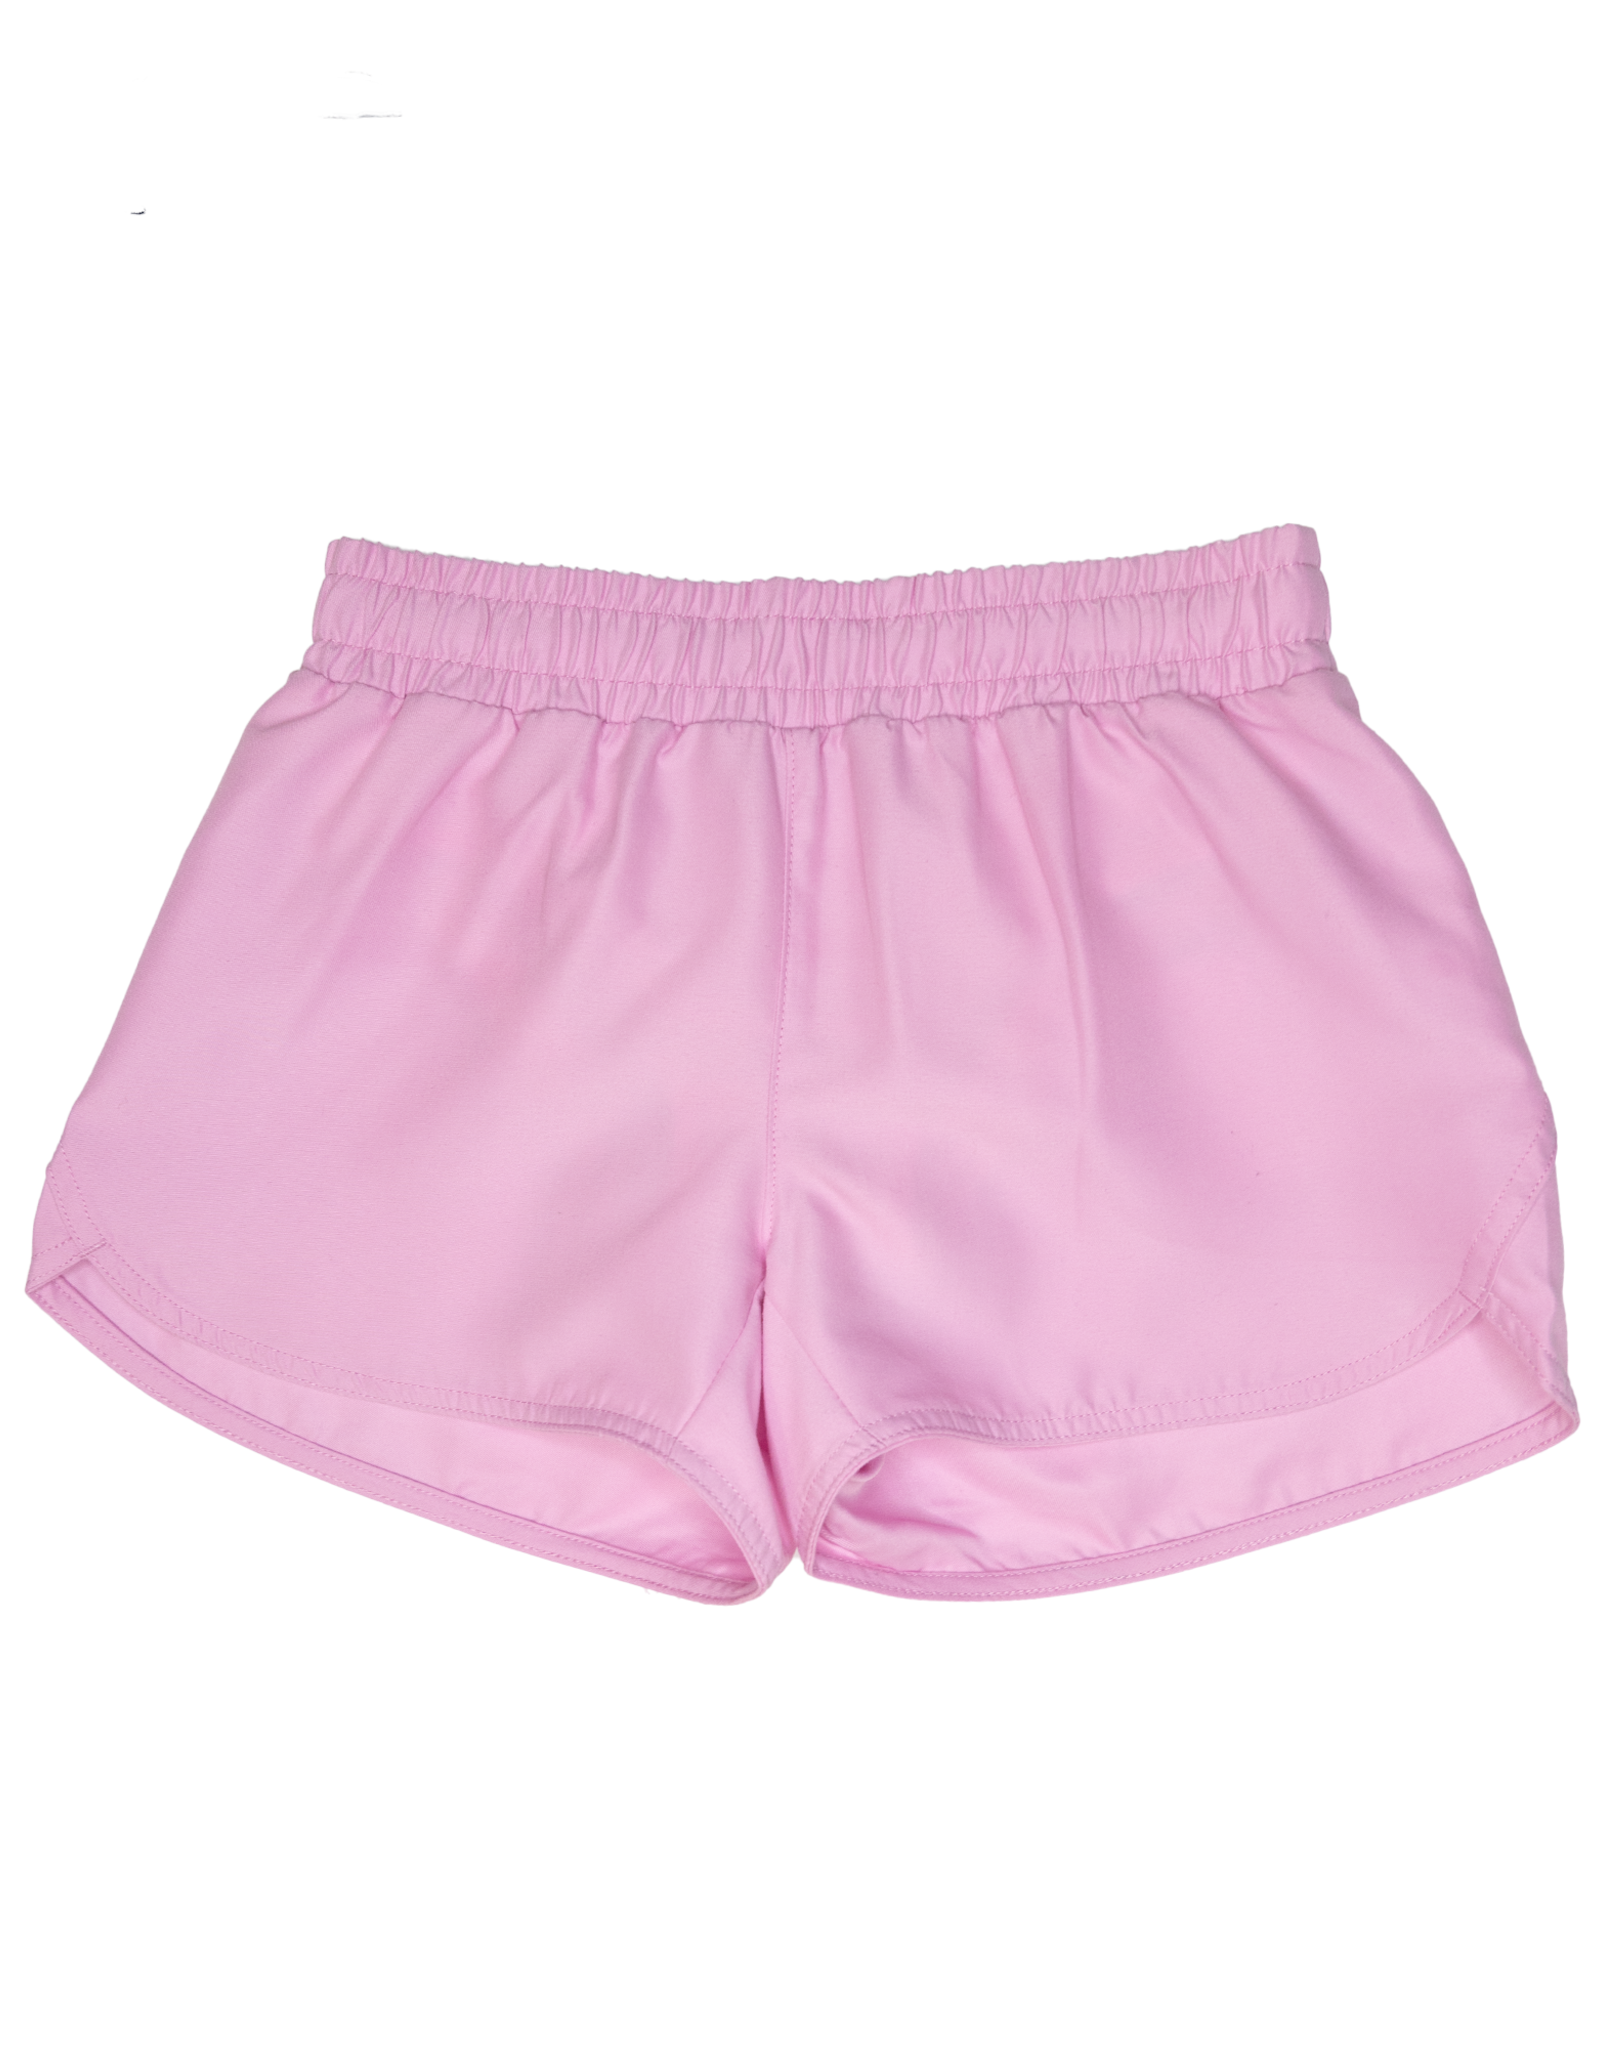 Honesty Kids 8621 Pink Shorts